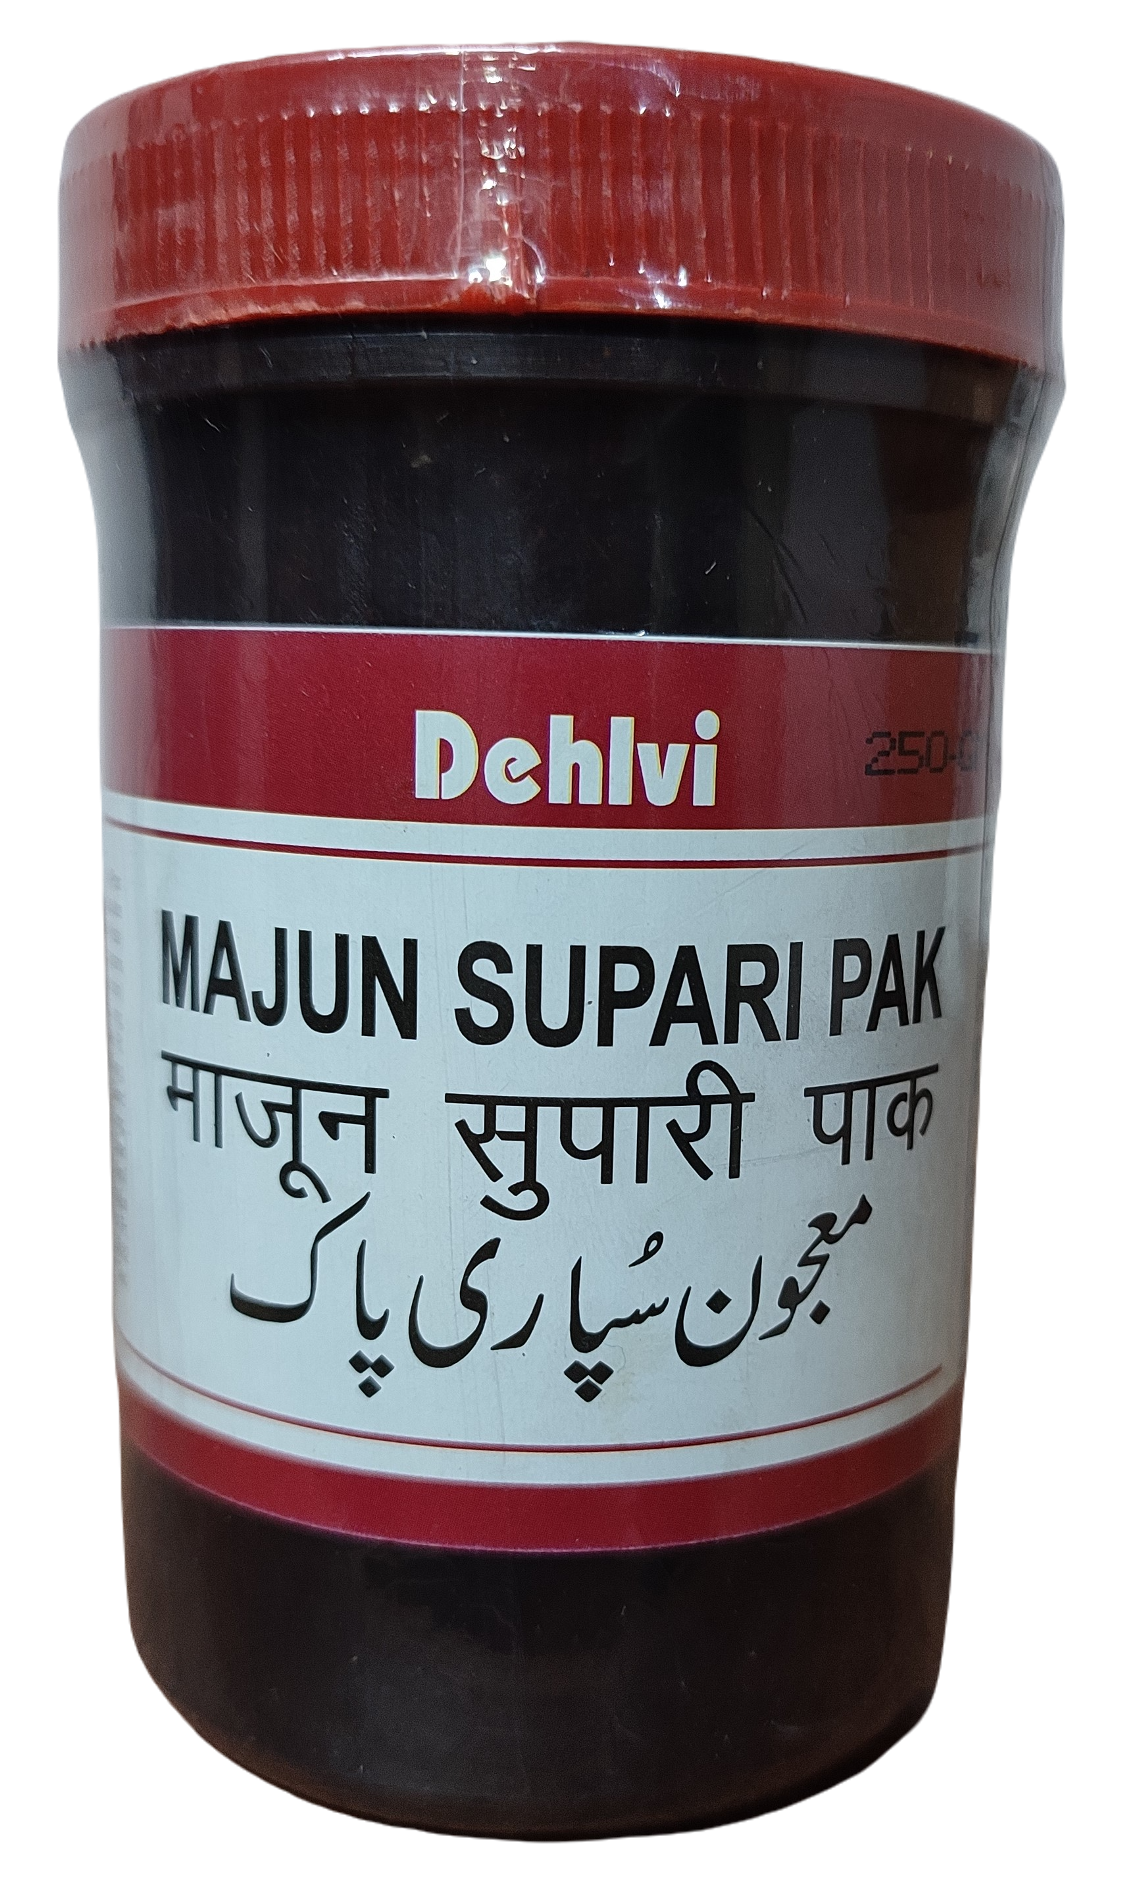 Majun Supari Pak Dehlvi (250g)